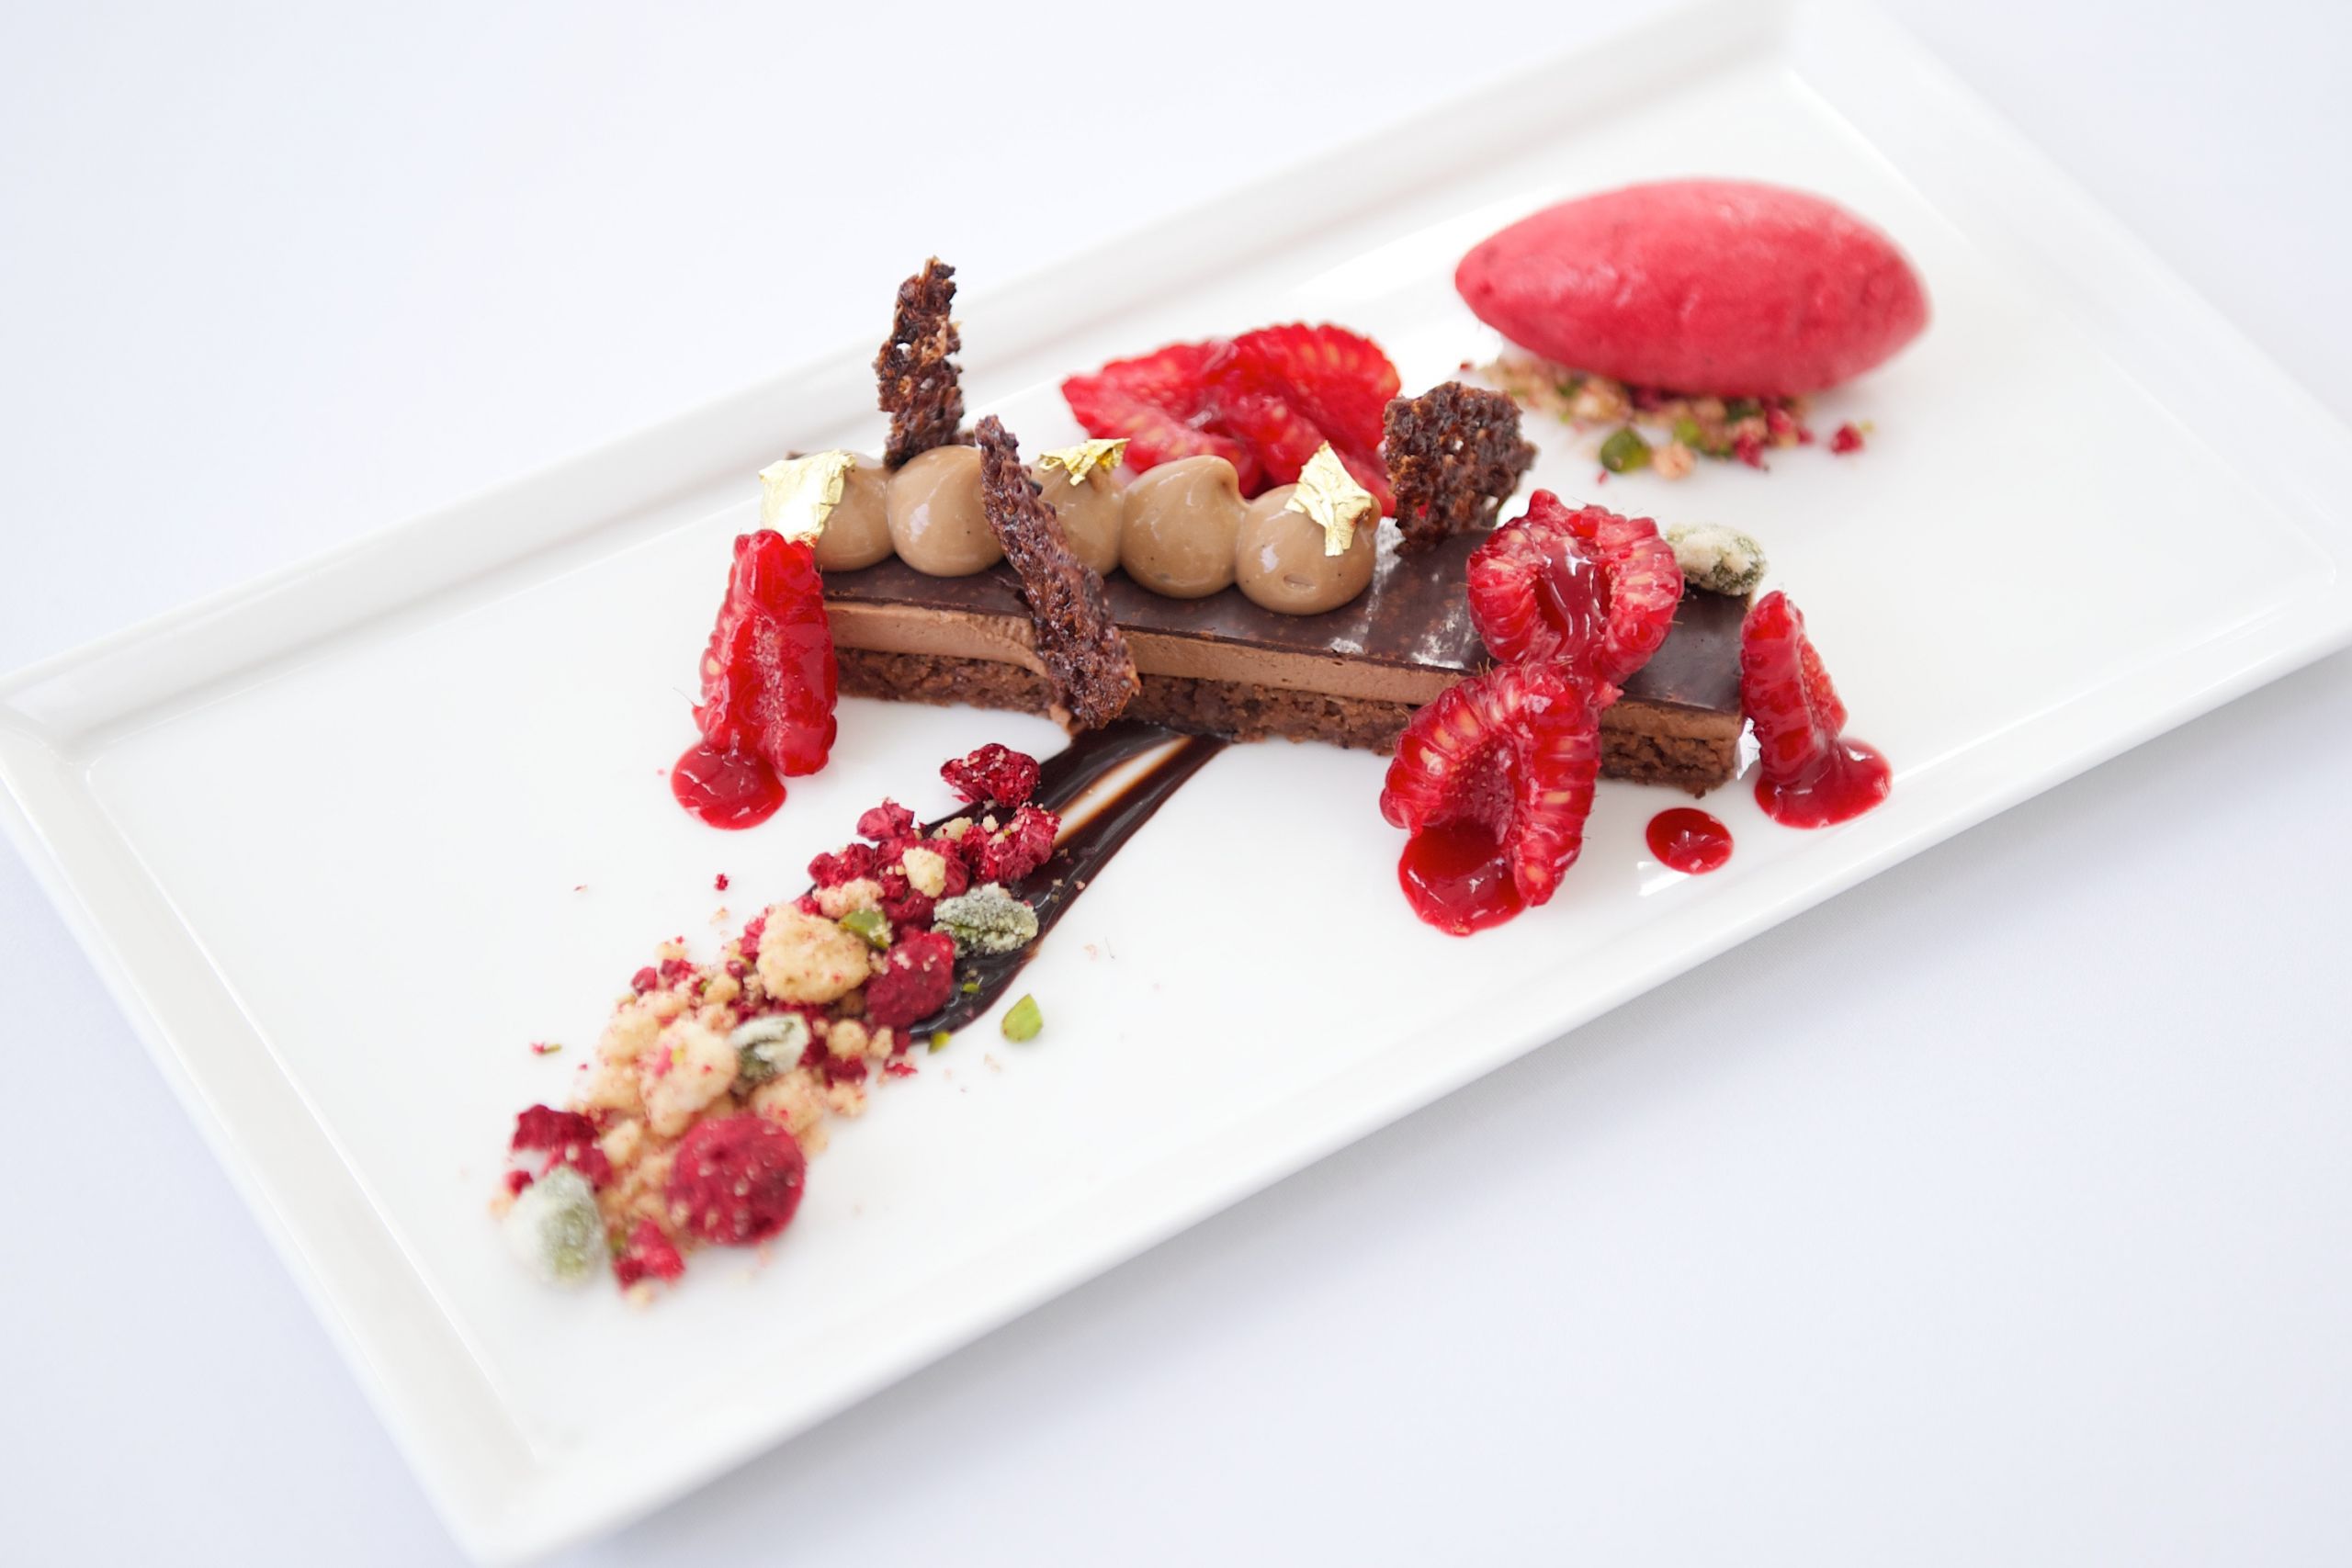 Gourmet Chocolate Desserts
 Mövenpick launches Gourmet Dessert Chef of the Year 2015